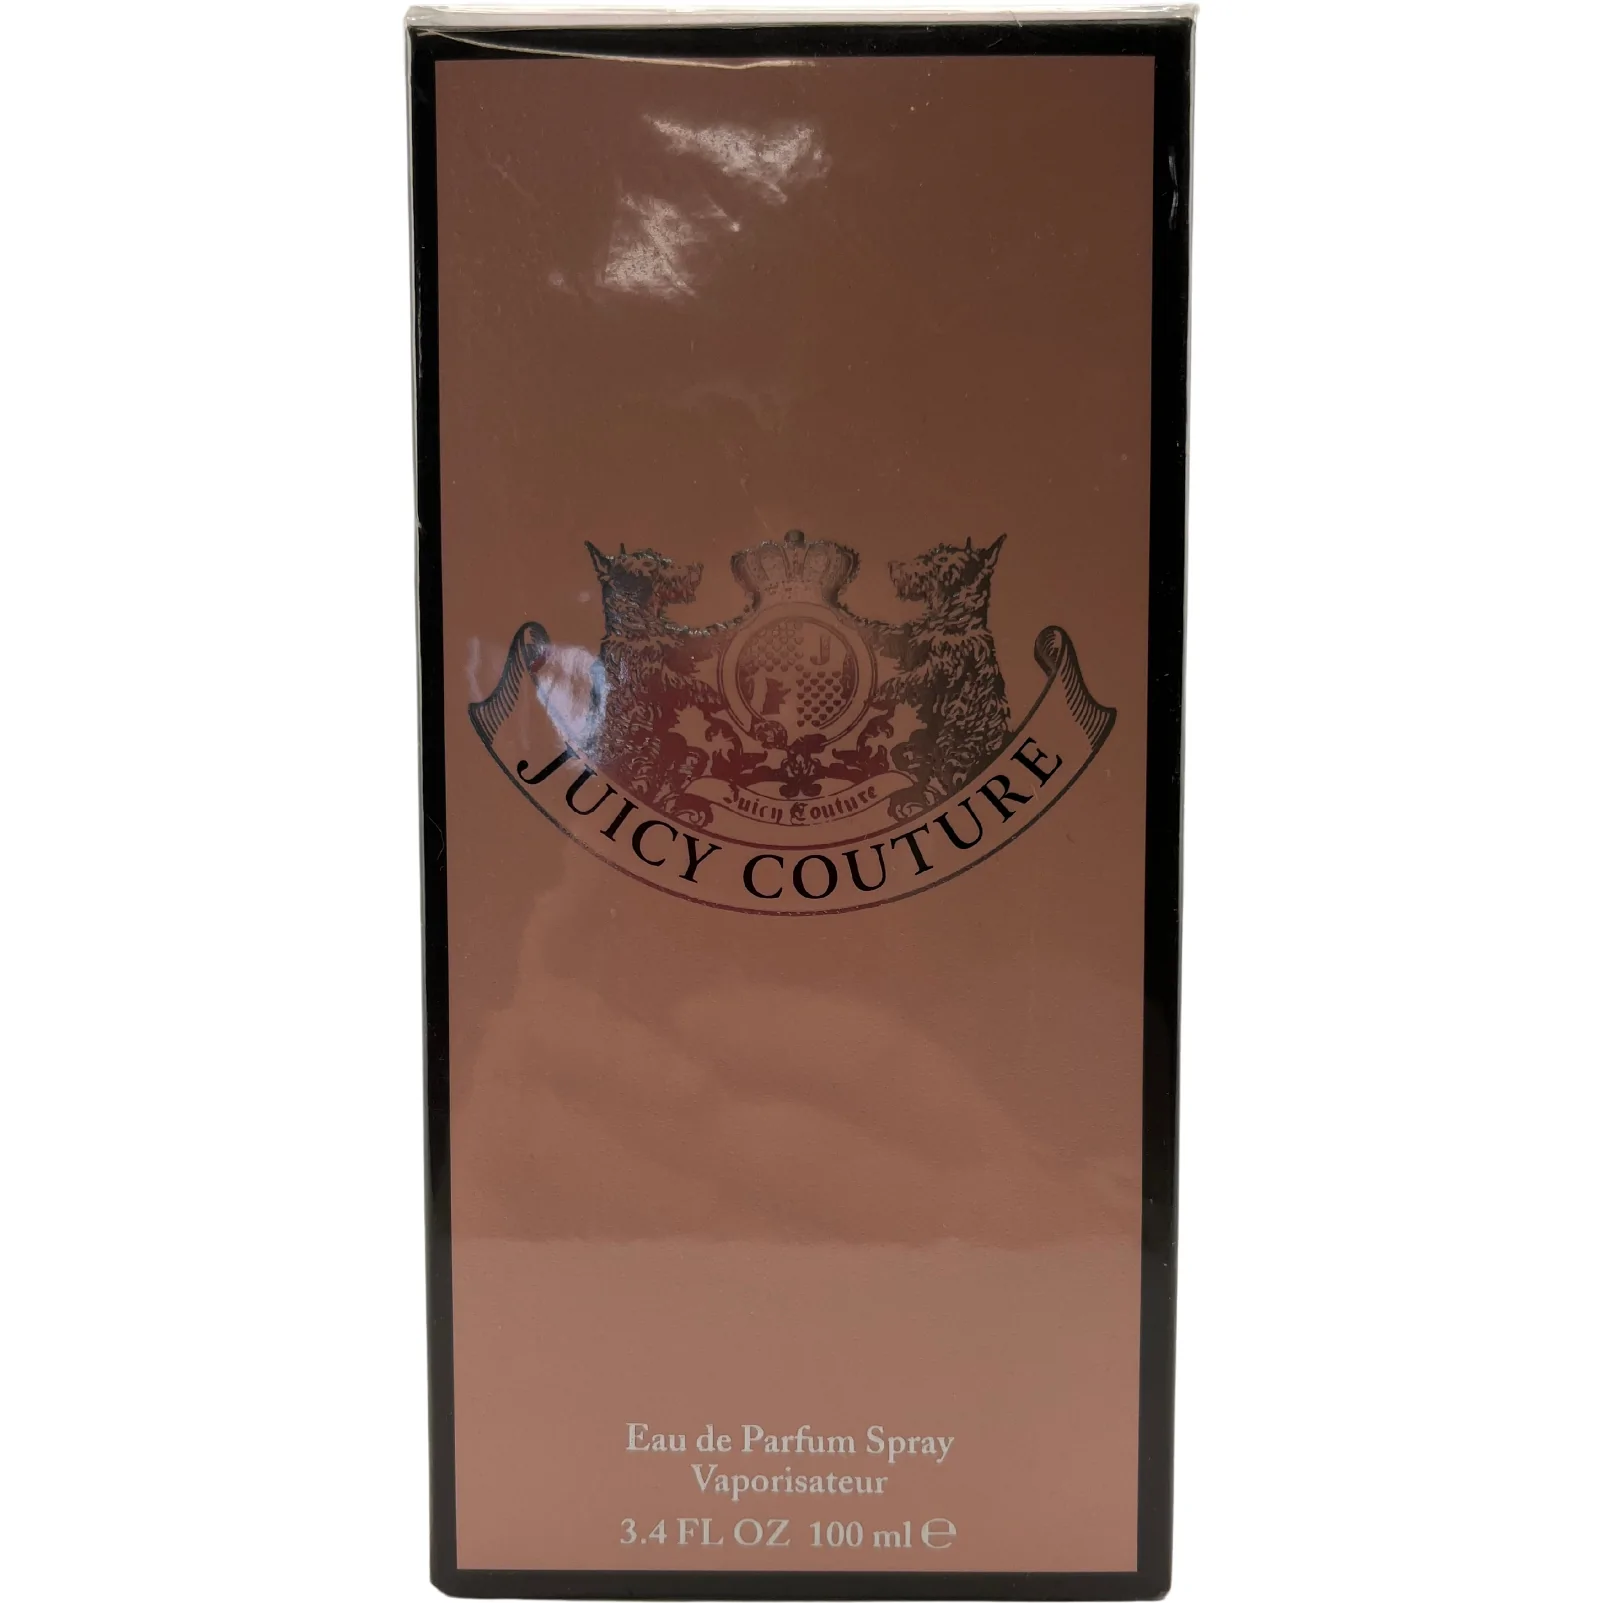 Juicy Couture Women's Perfume: 3.4